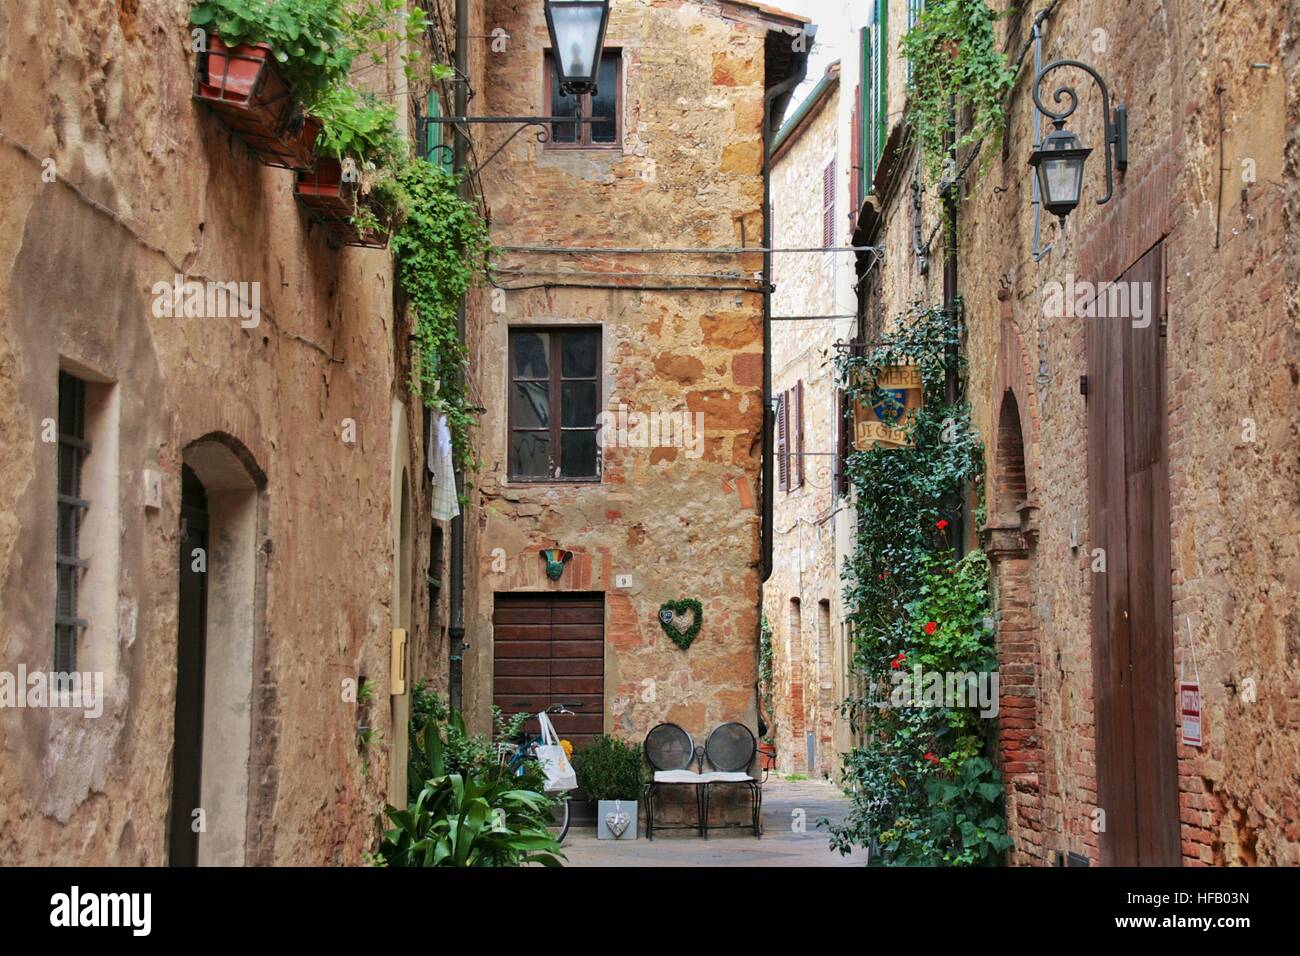 A small street in Pienza, Italy Stock Photo